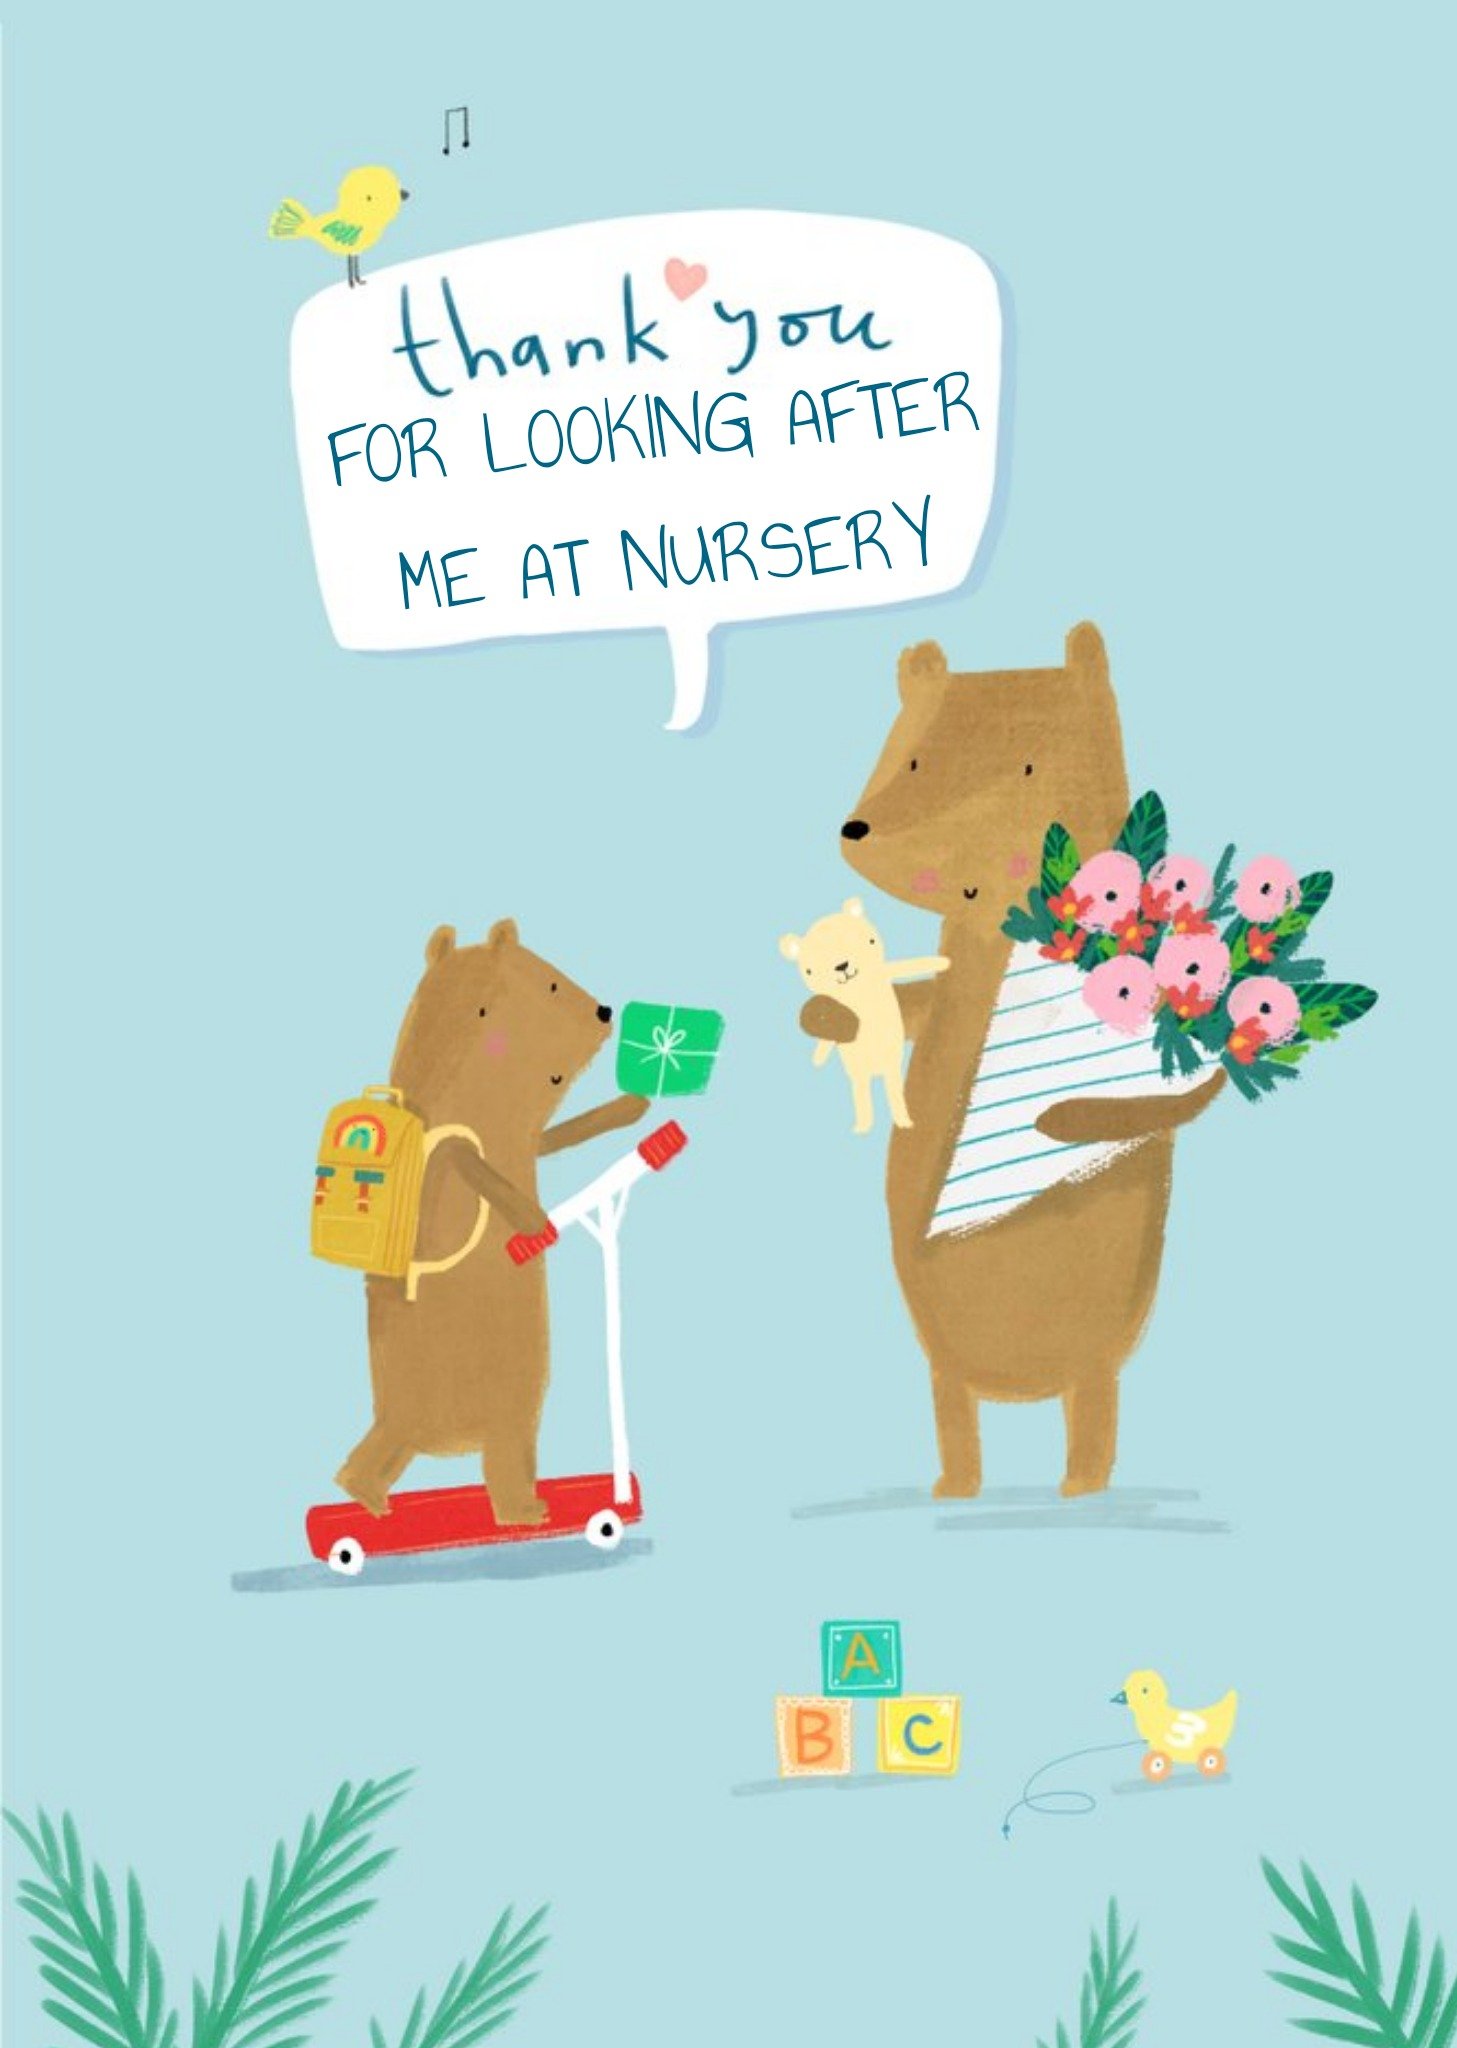 Moonpig Colette Barker Bears Nursey Gift Thank You Card, Large